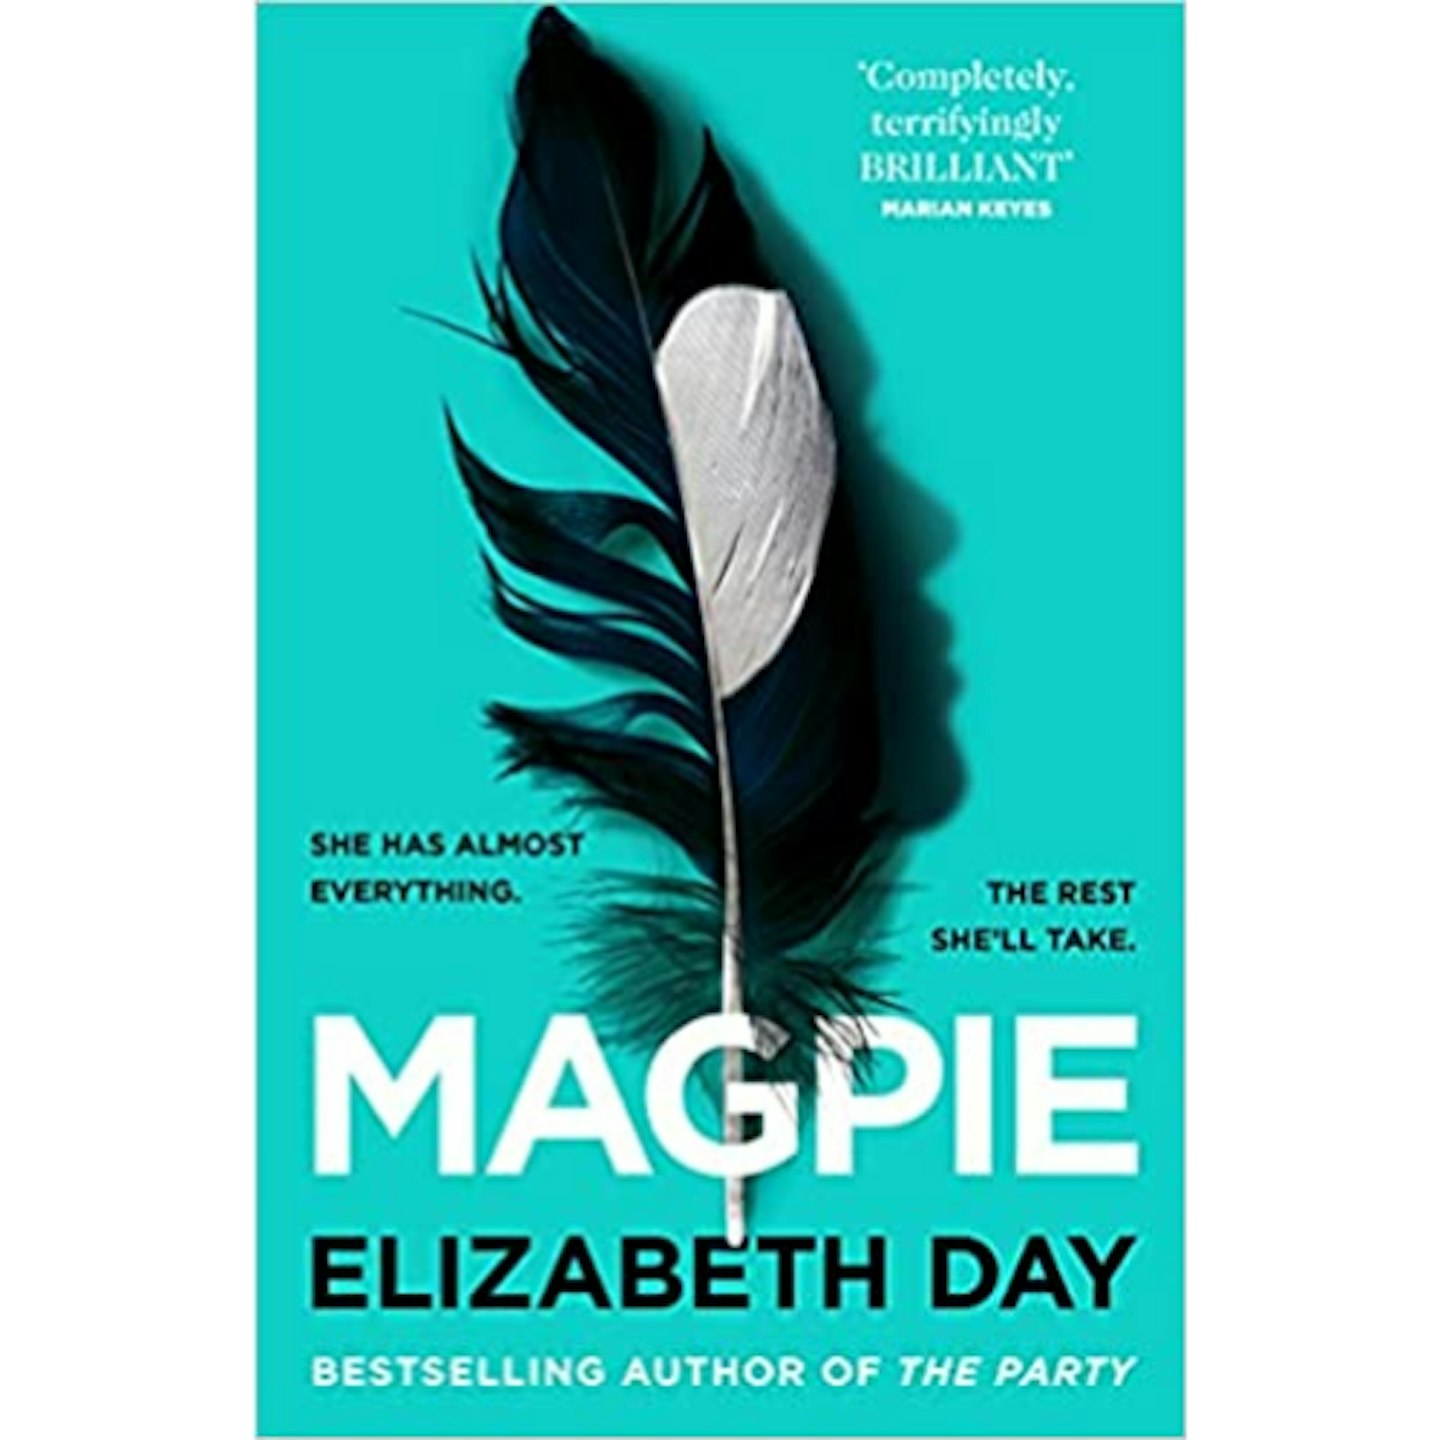 Magpie by Elizabeth Day